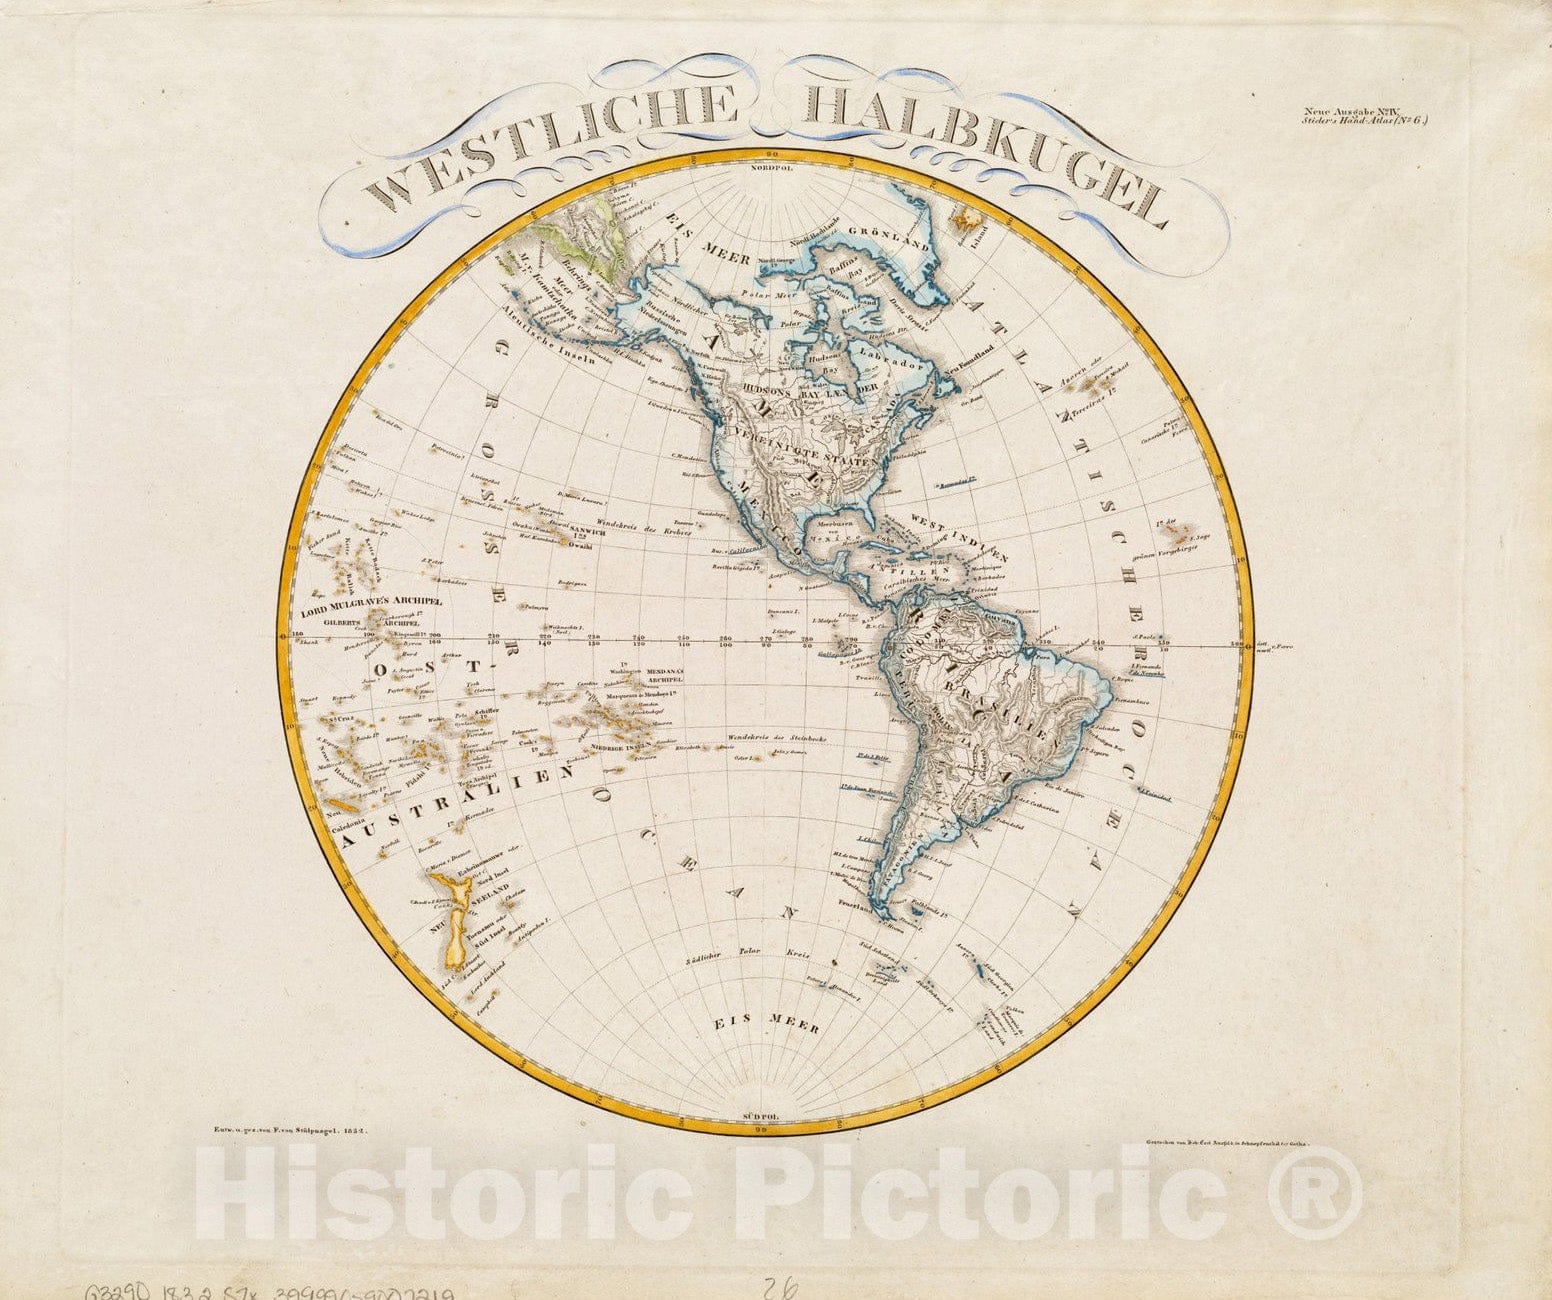 Historical Map, 1832 Westliche halbkugel, Vintage Wall Art